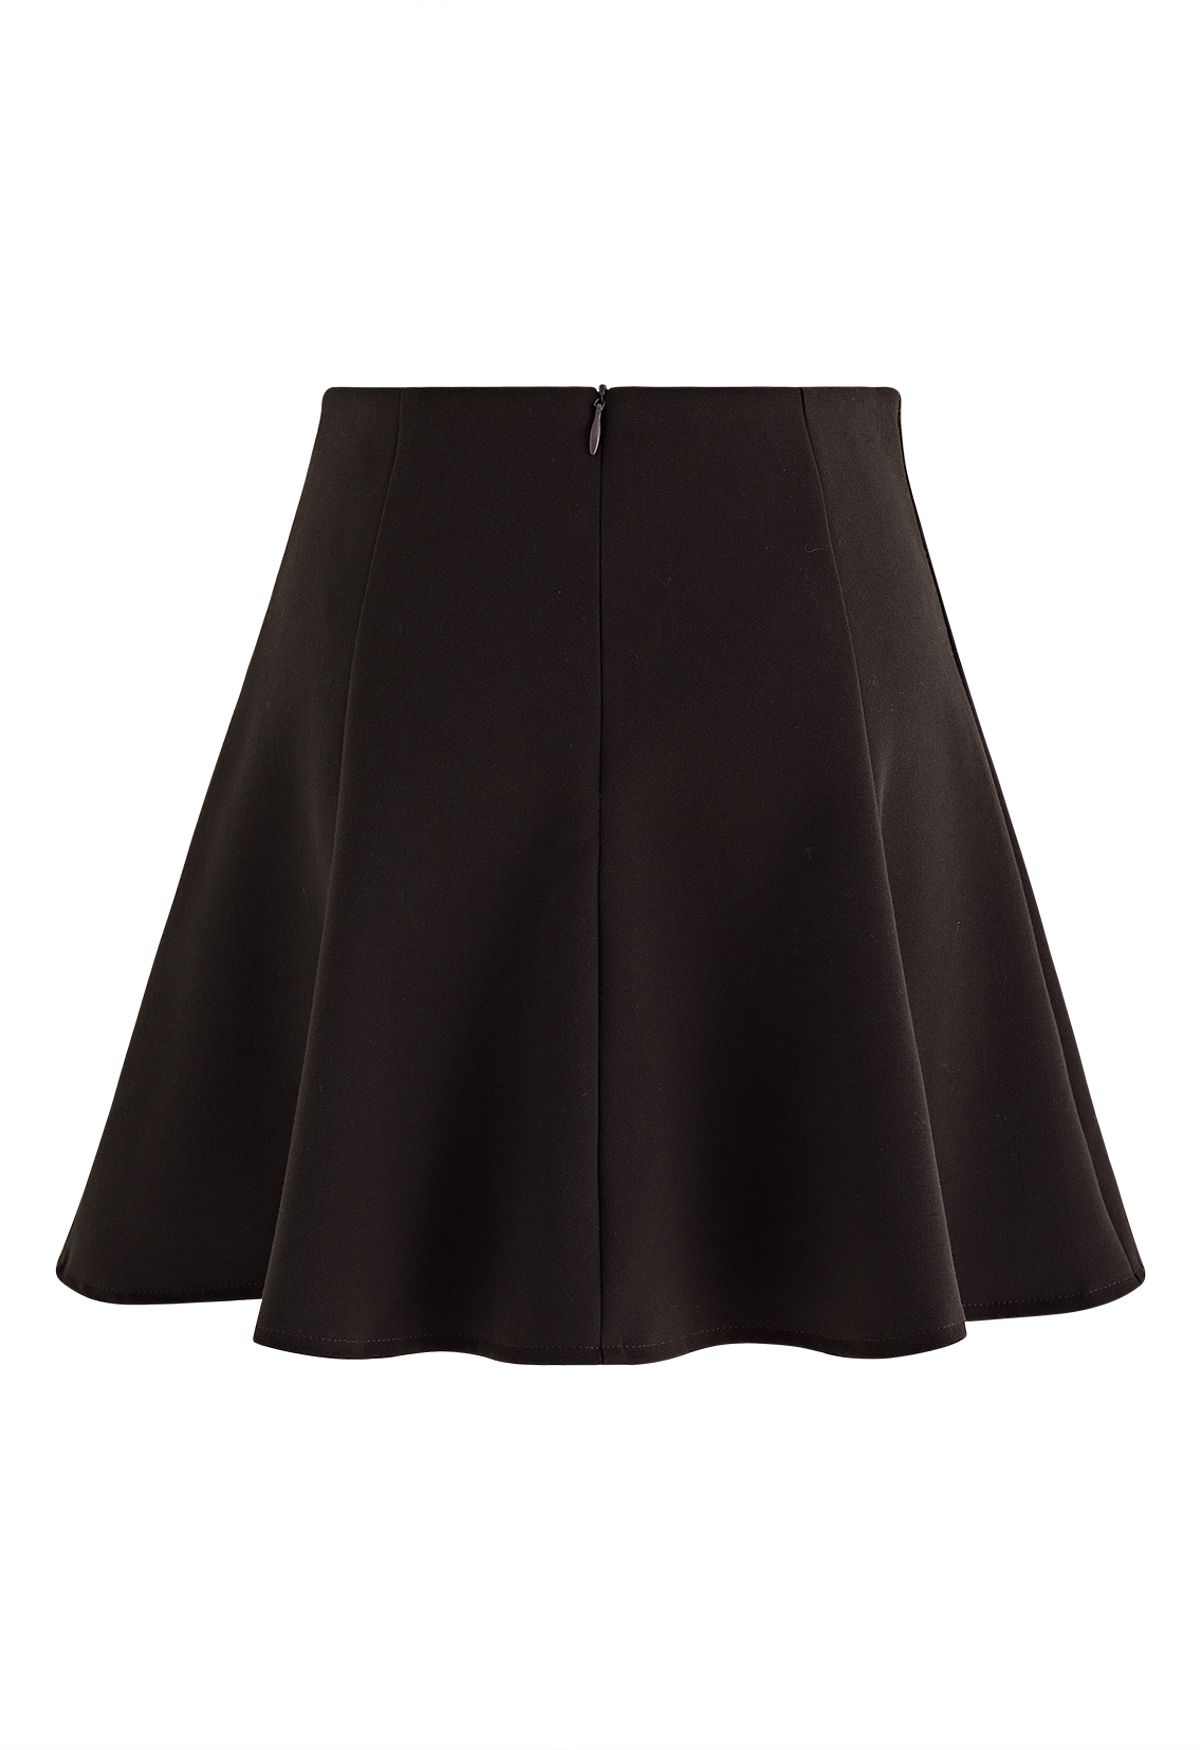 High Waist Flare Mini Skirt in Brown